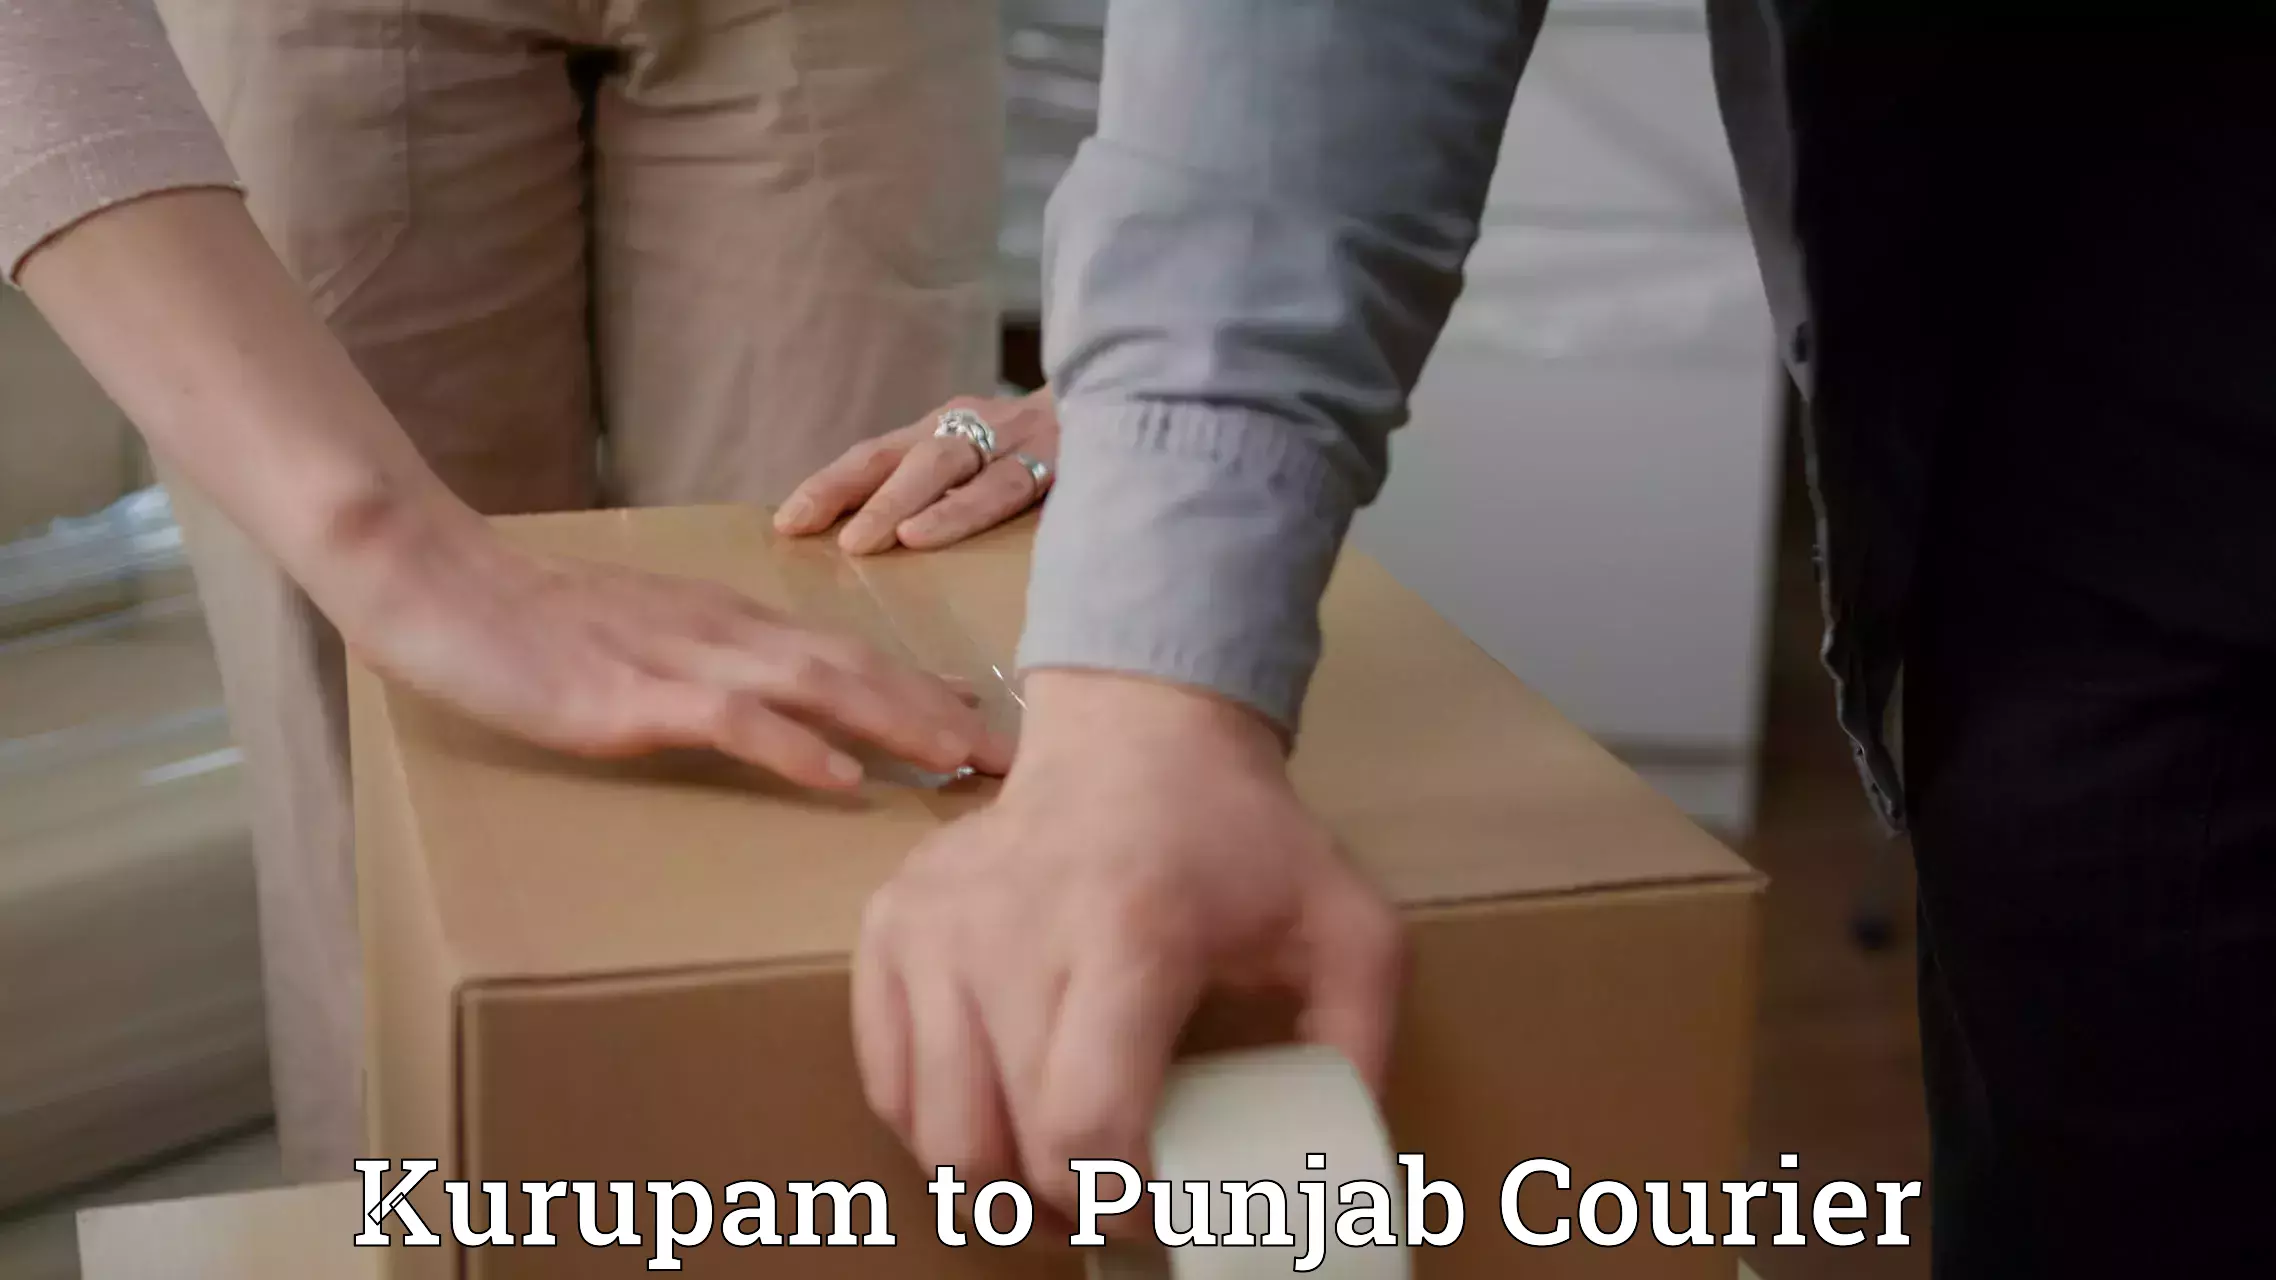 Same-day delivery solutions Kurupam to Punjab